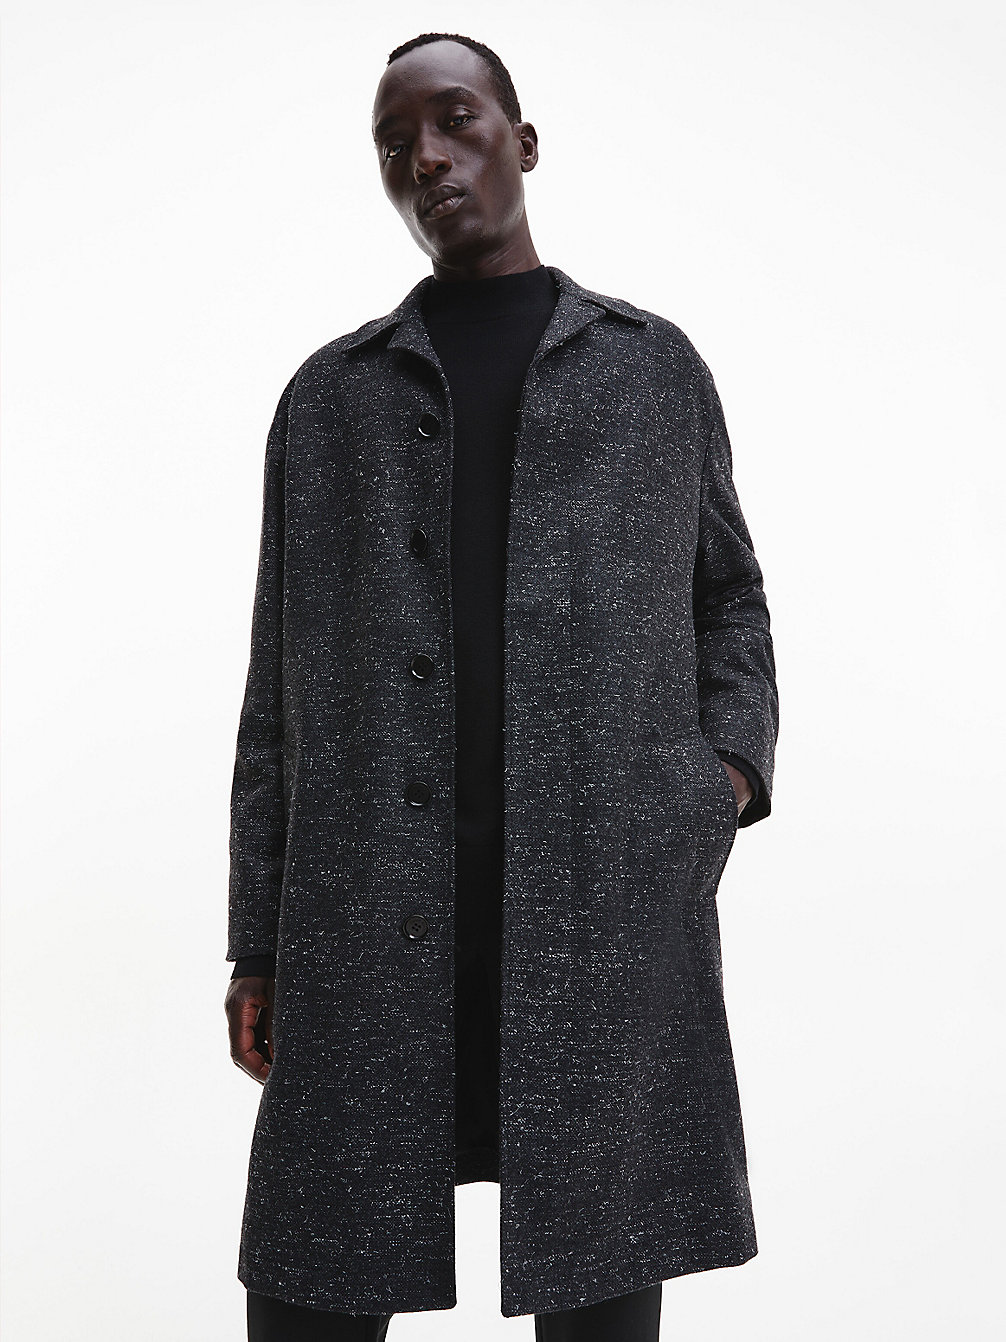 MEDIUM CHARCOAL Wool Tweed Car Coat undefined men Calvin Klein